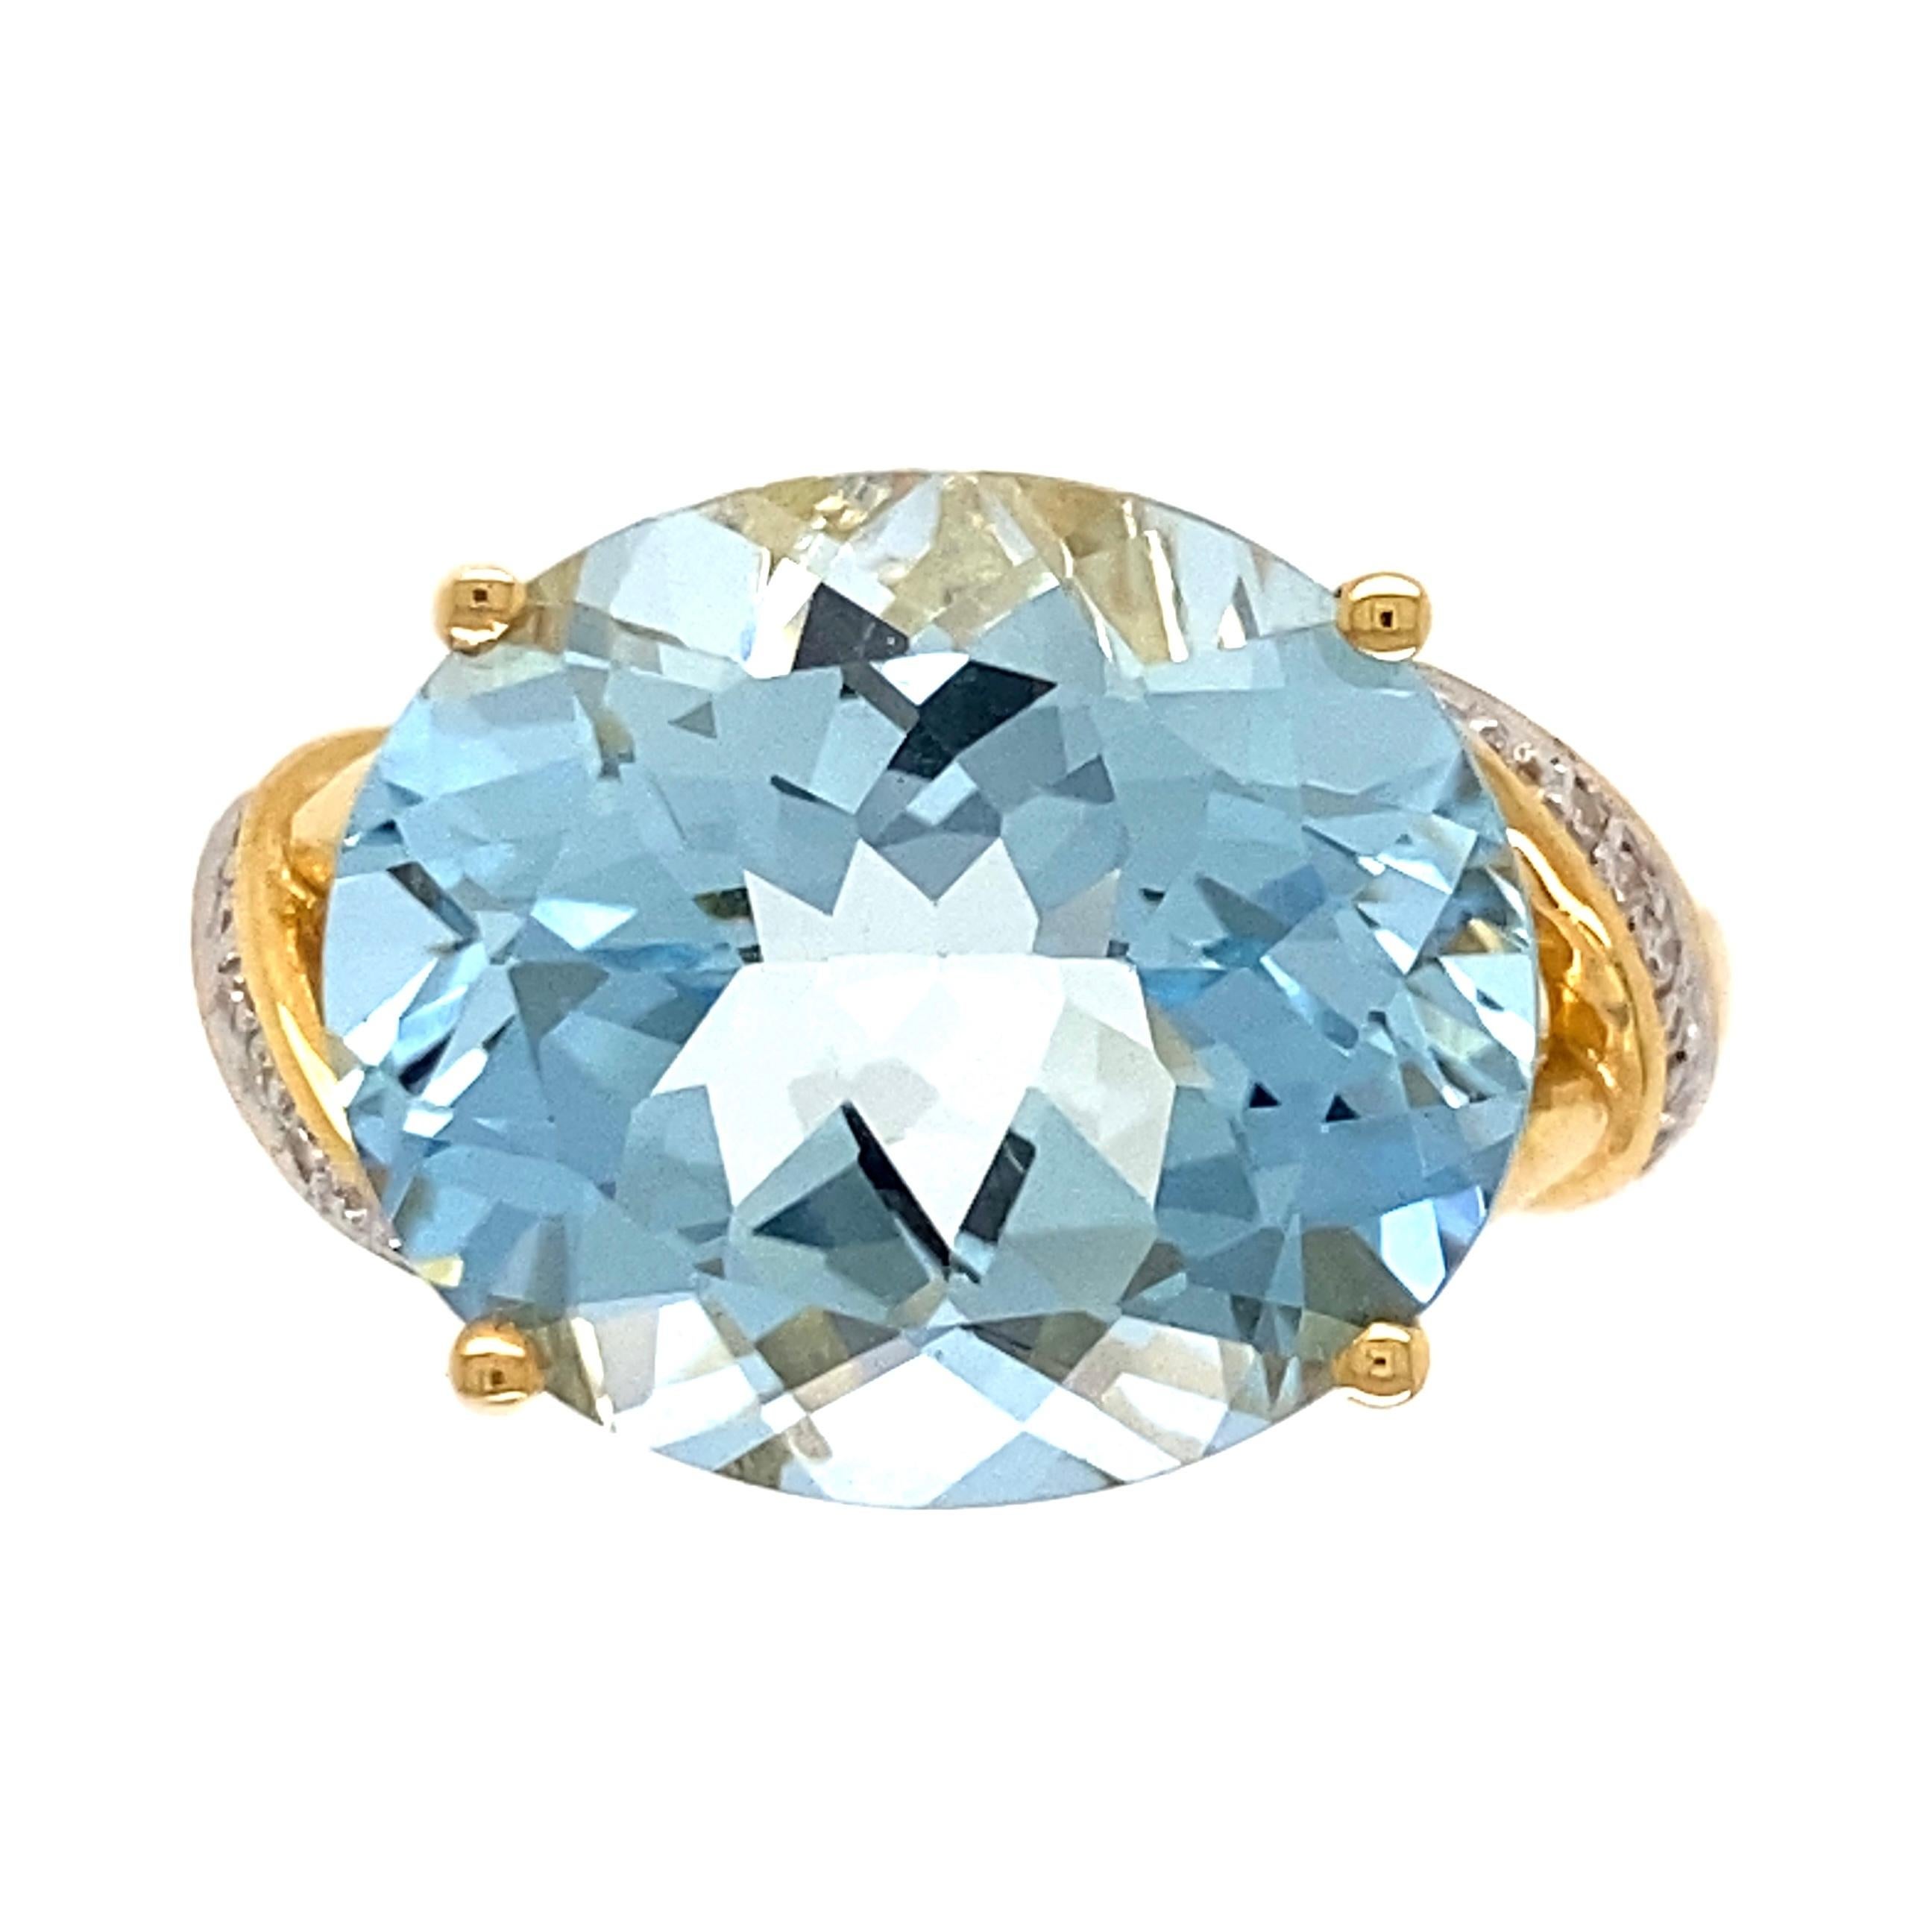 7.61 Carat Aquamarine and Diamond Art Deco Revival Gold Ring For Sale 1